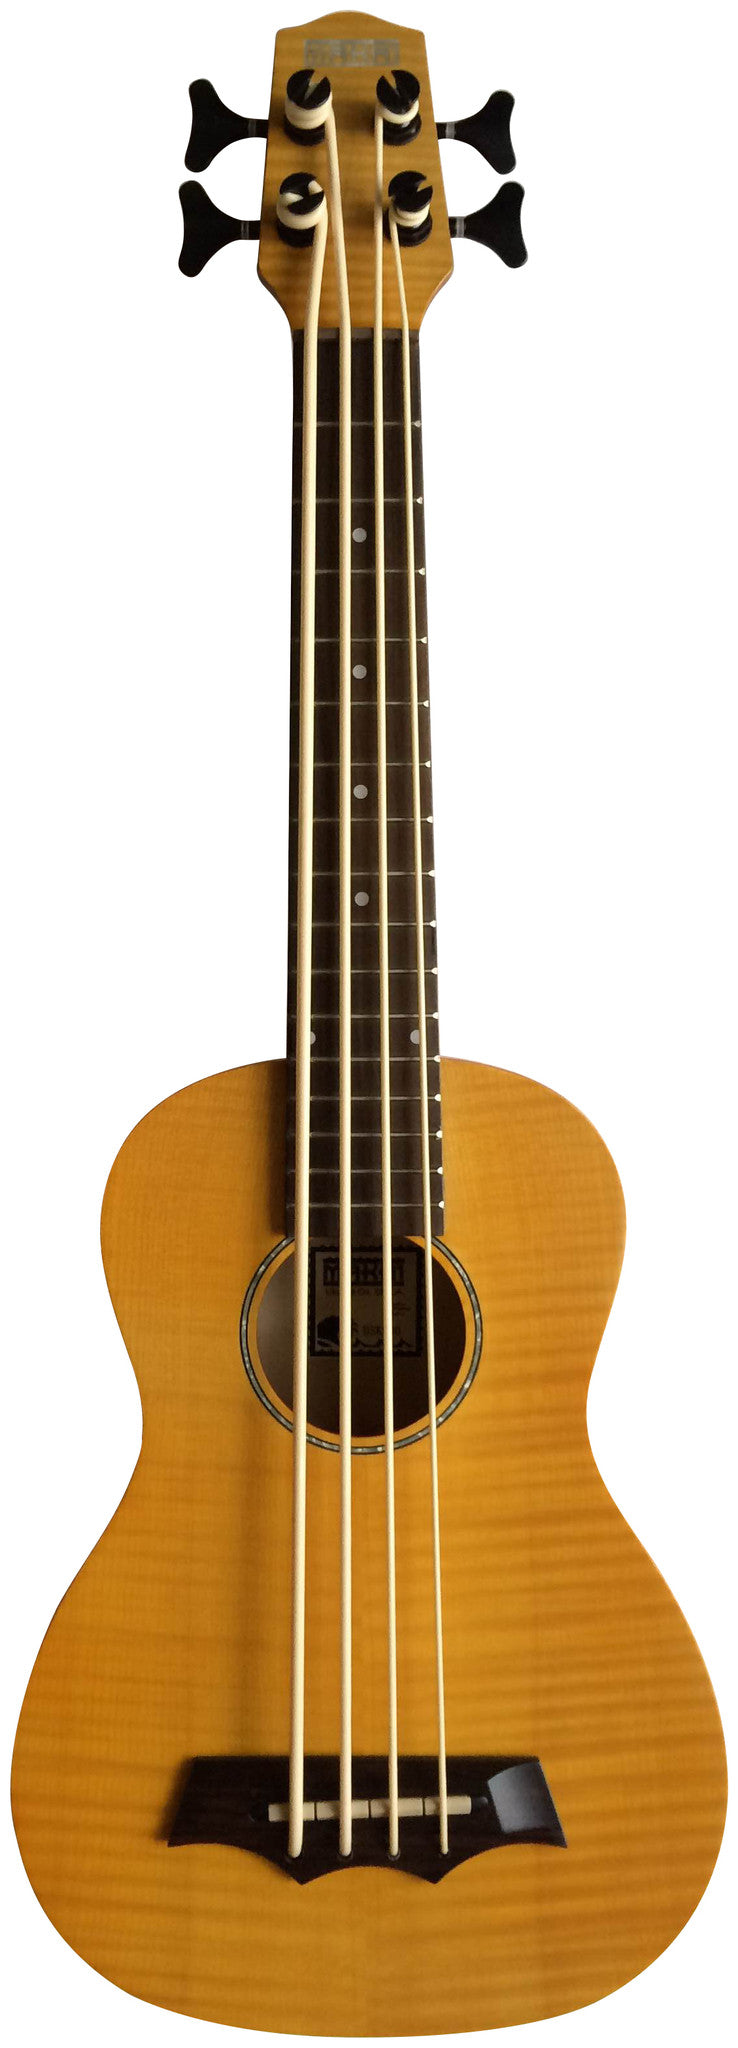 Makai BSK-80 Mahogany Series With Pickup Bass Ukulele With Aquila Strings